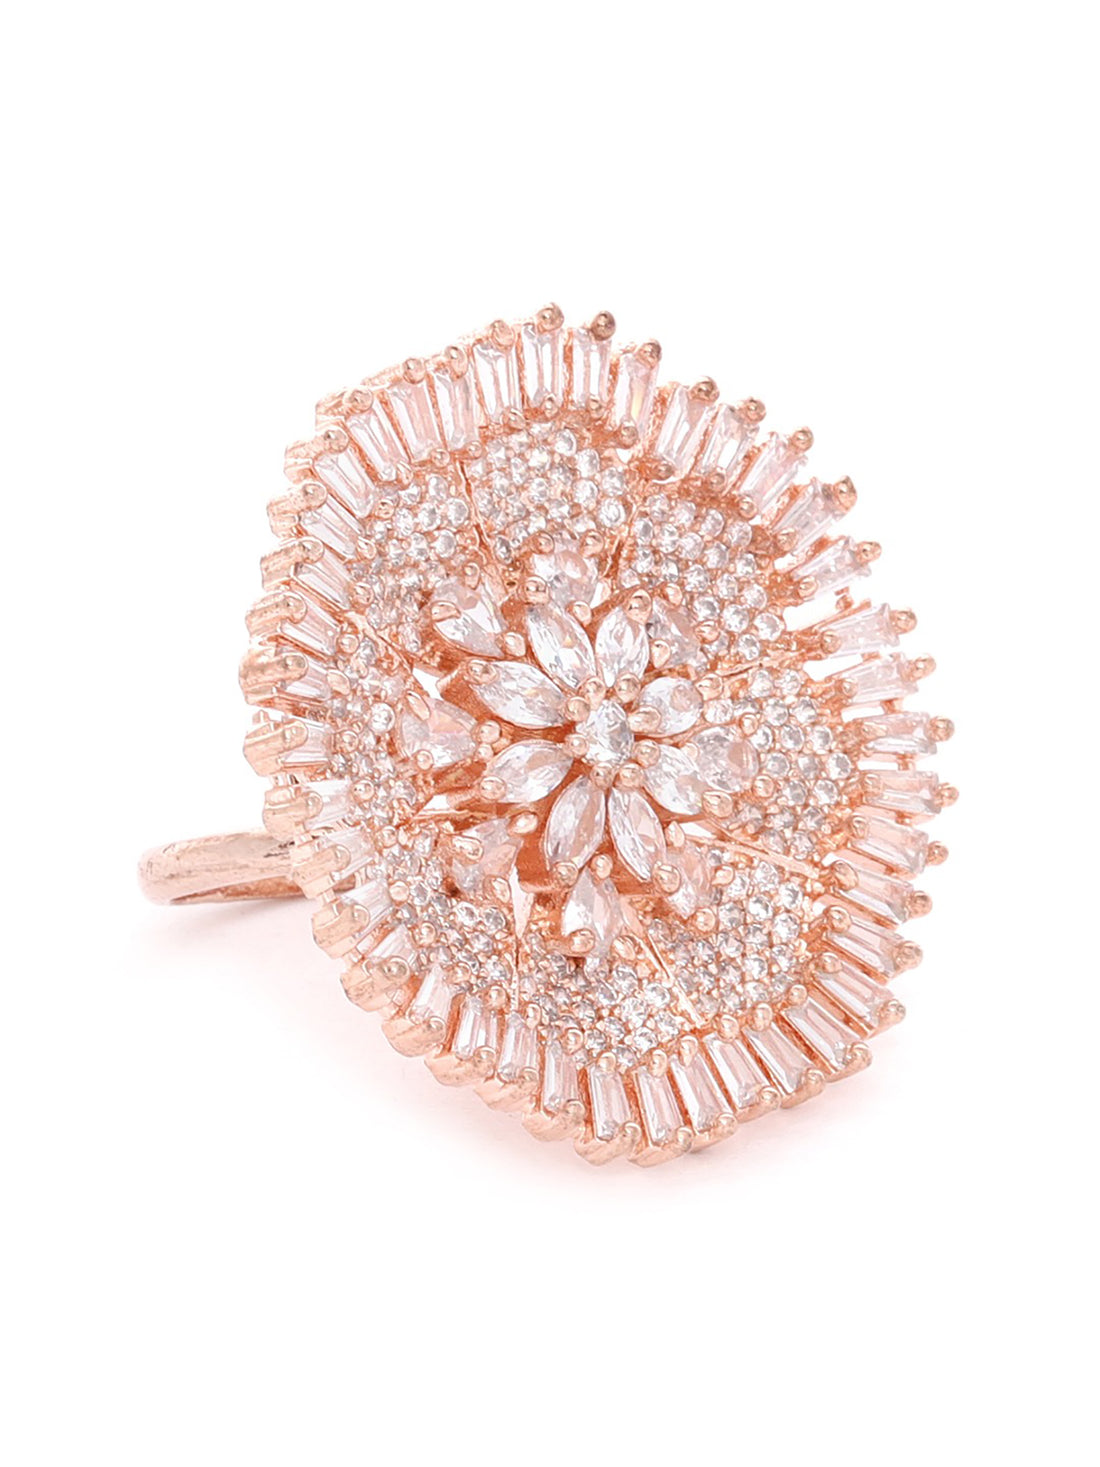 Carlton London Rose Gold Plated Cz Studded Floral Shape Finger Ring For Women